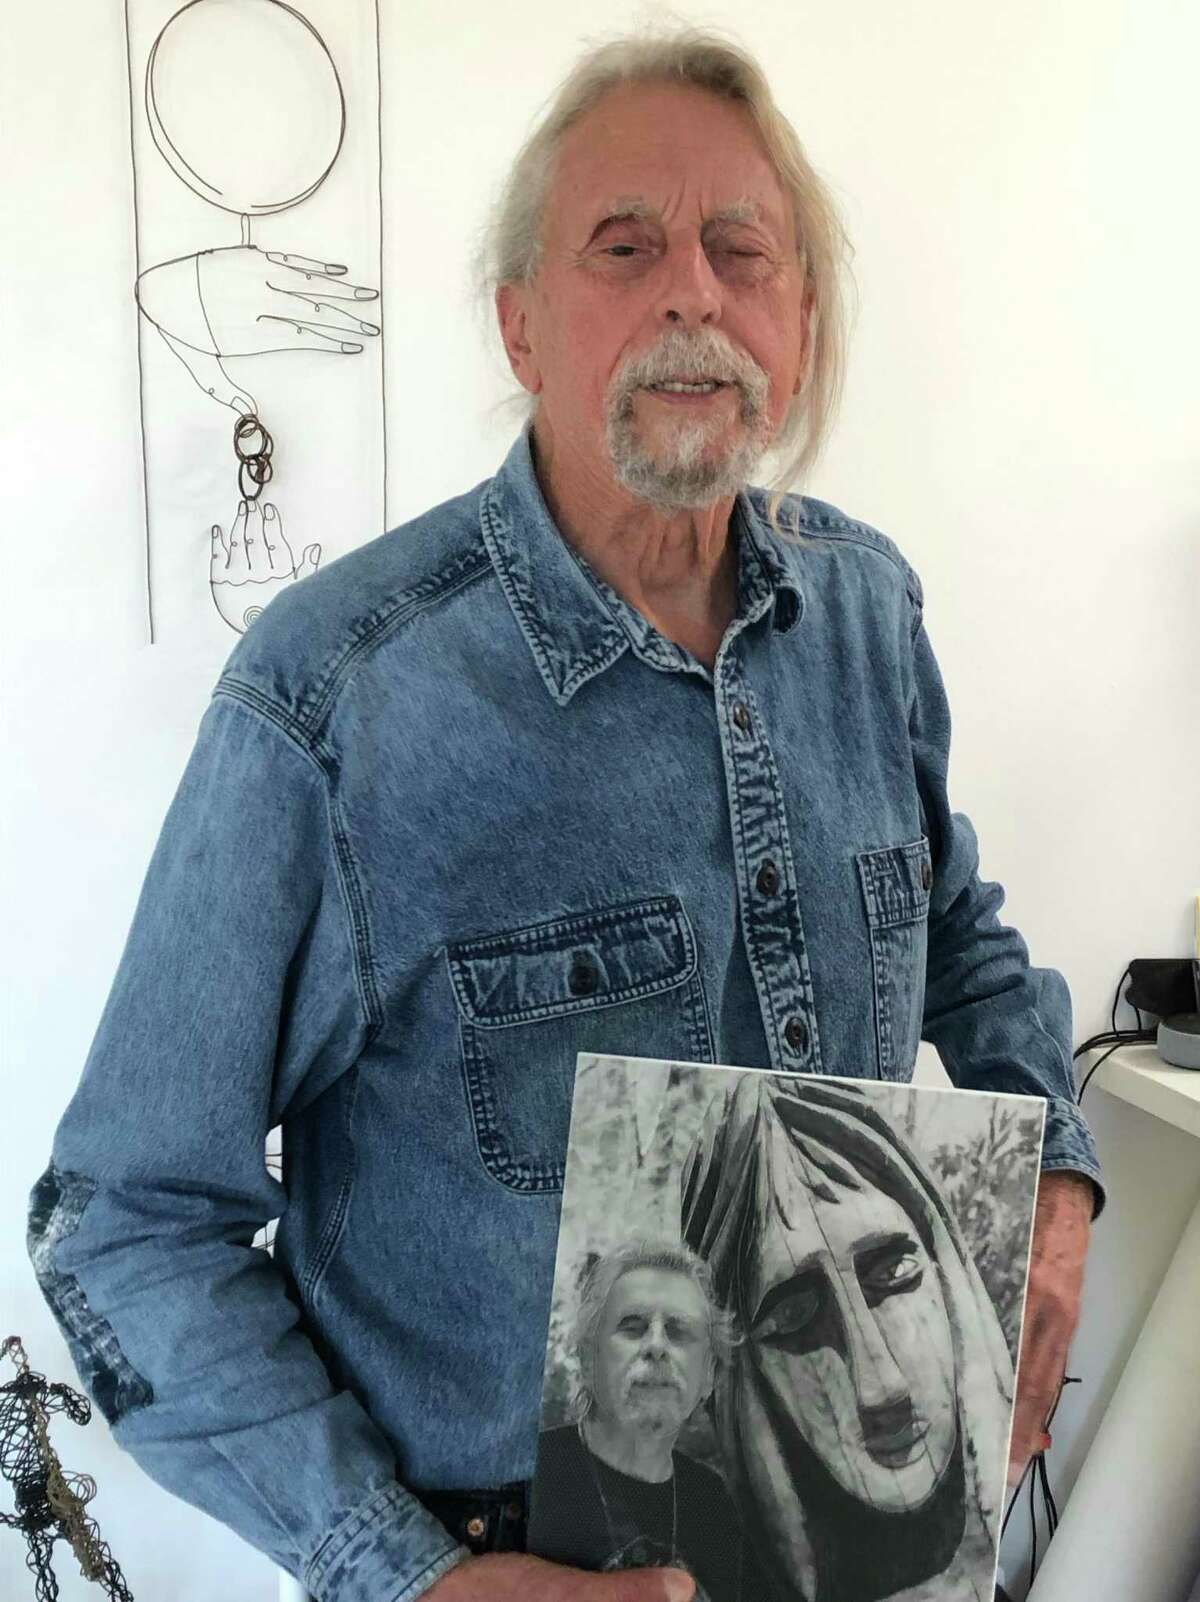 Jerry Kuns with artwork by Naomi Rosenberg.